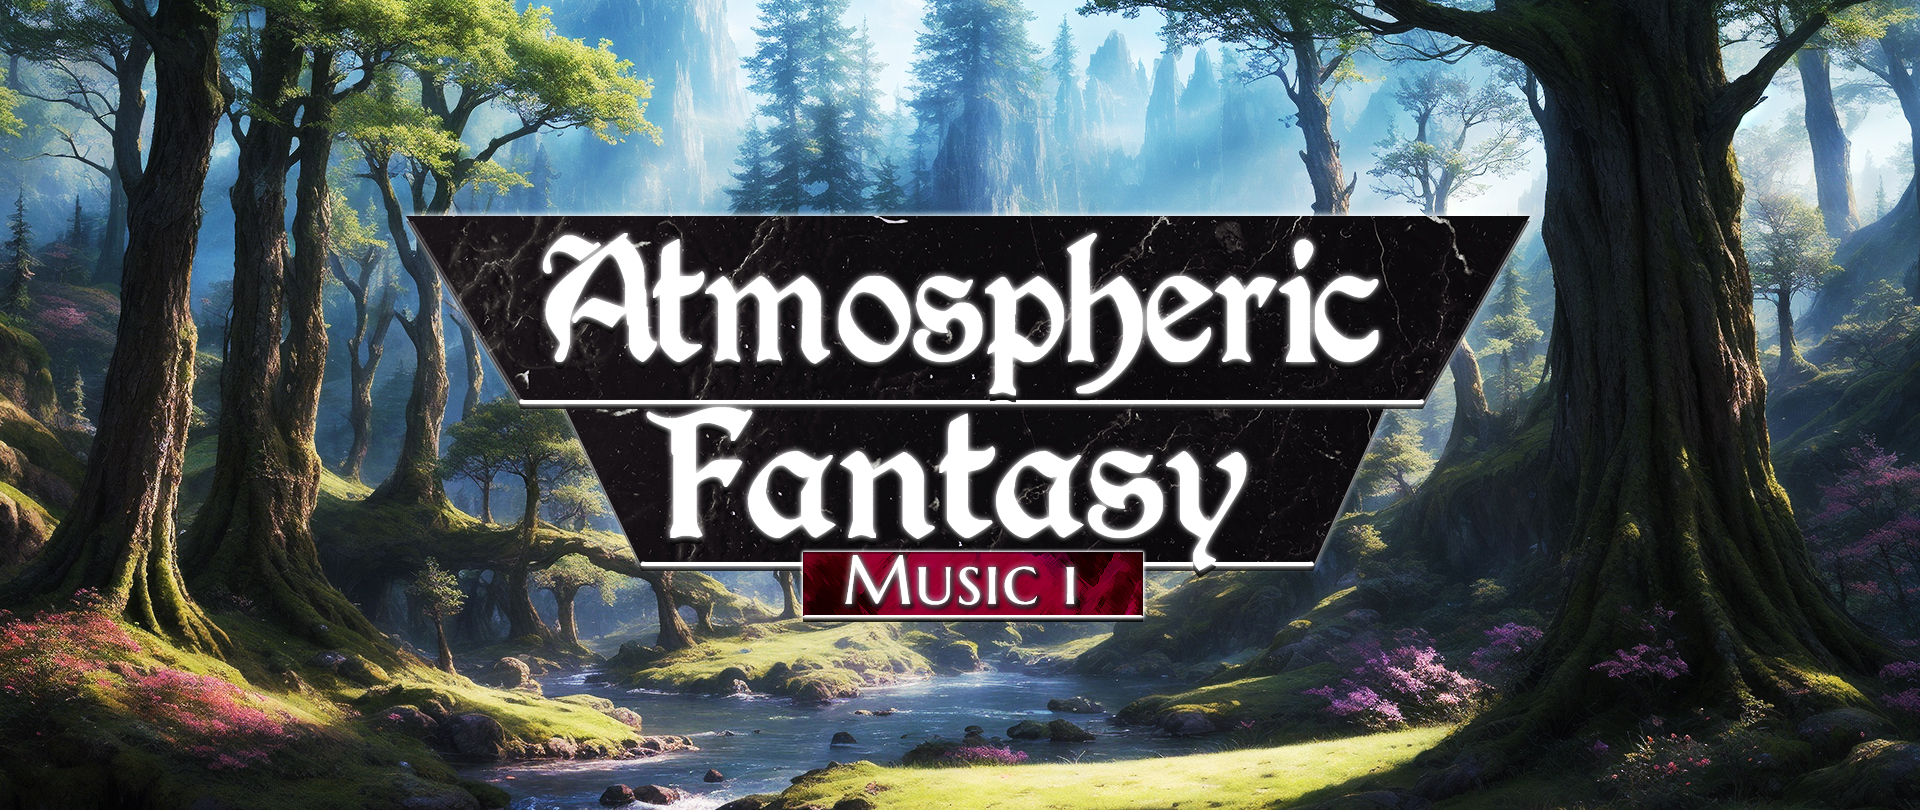 Atmospheric Fantasy Music 1